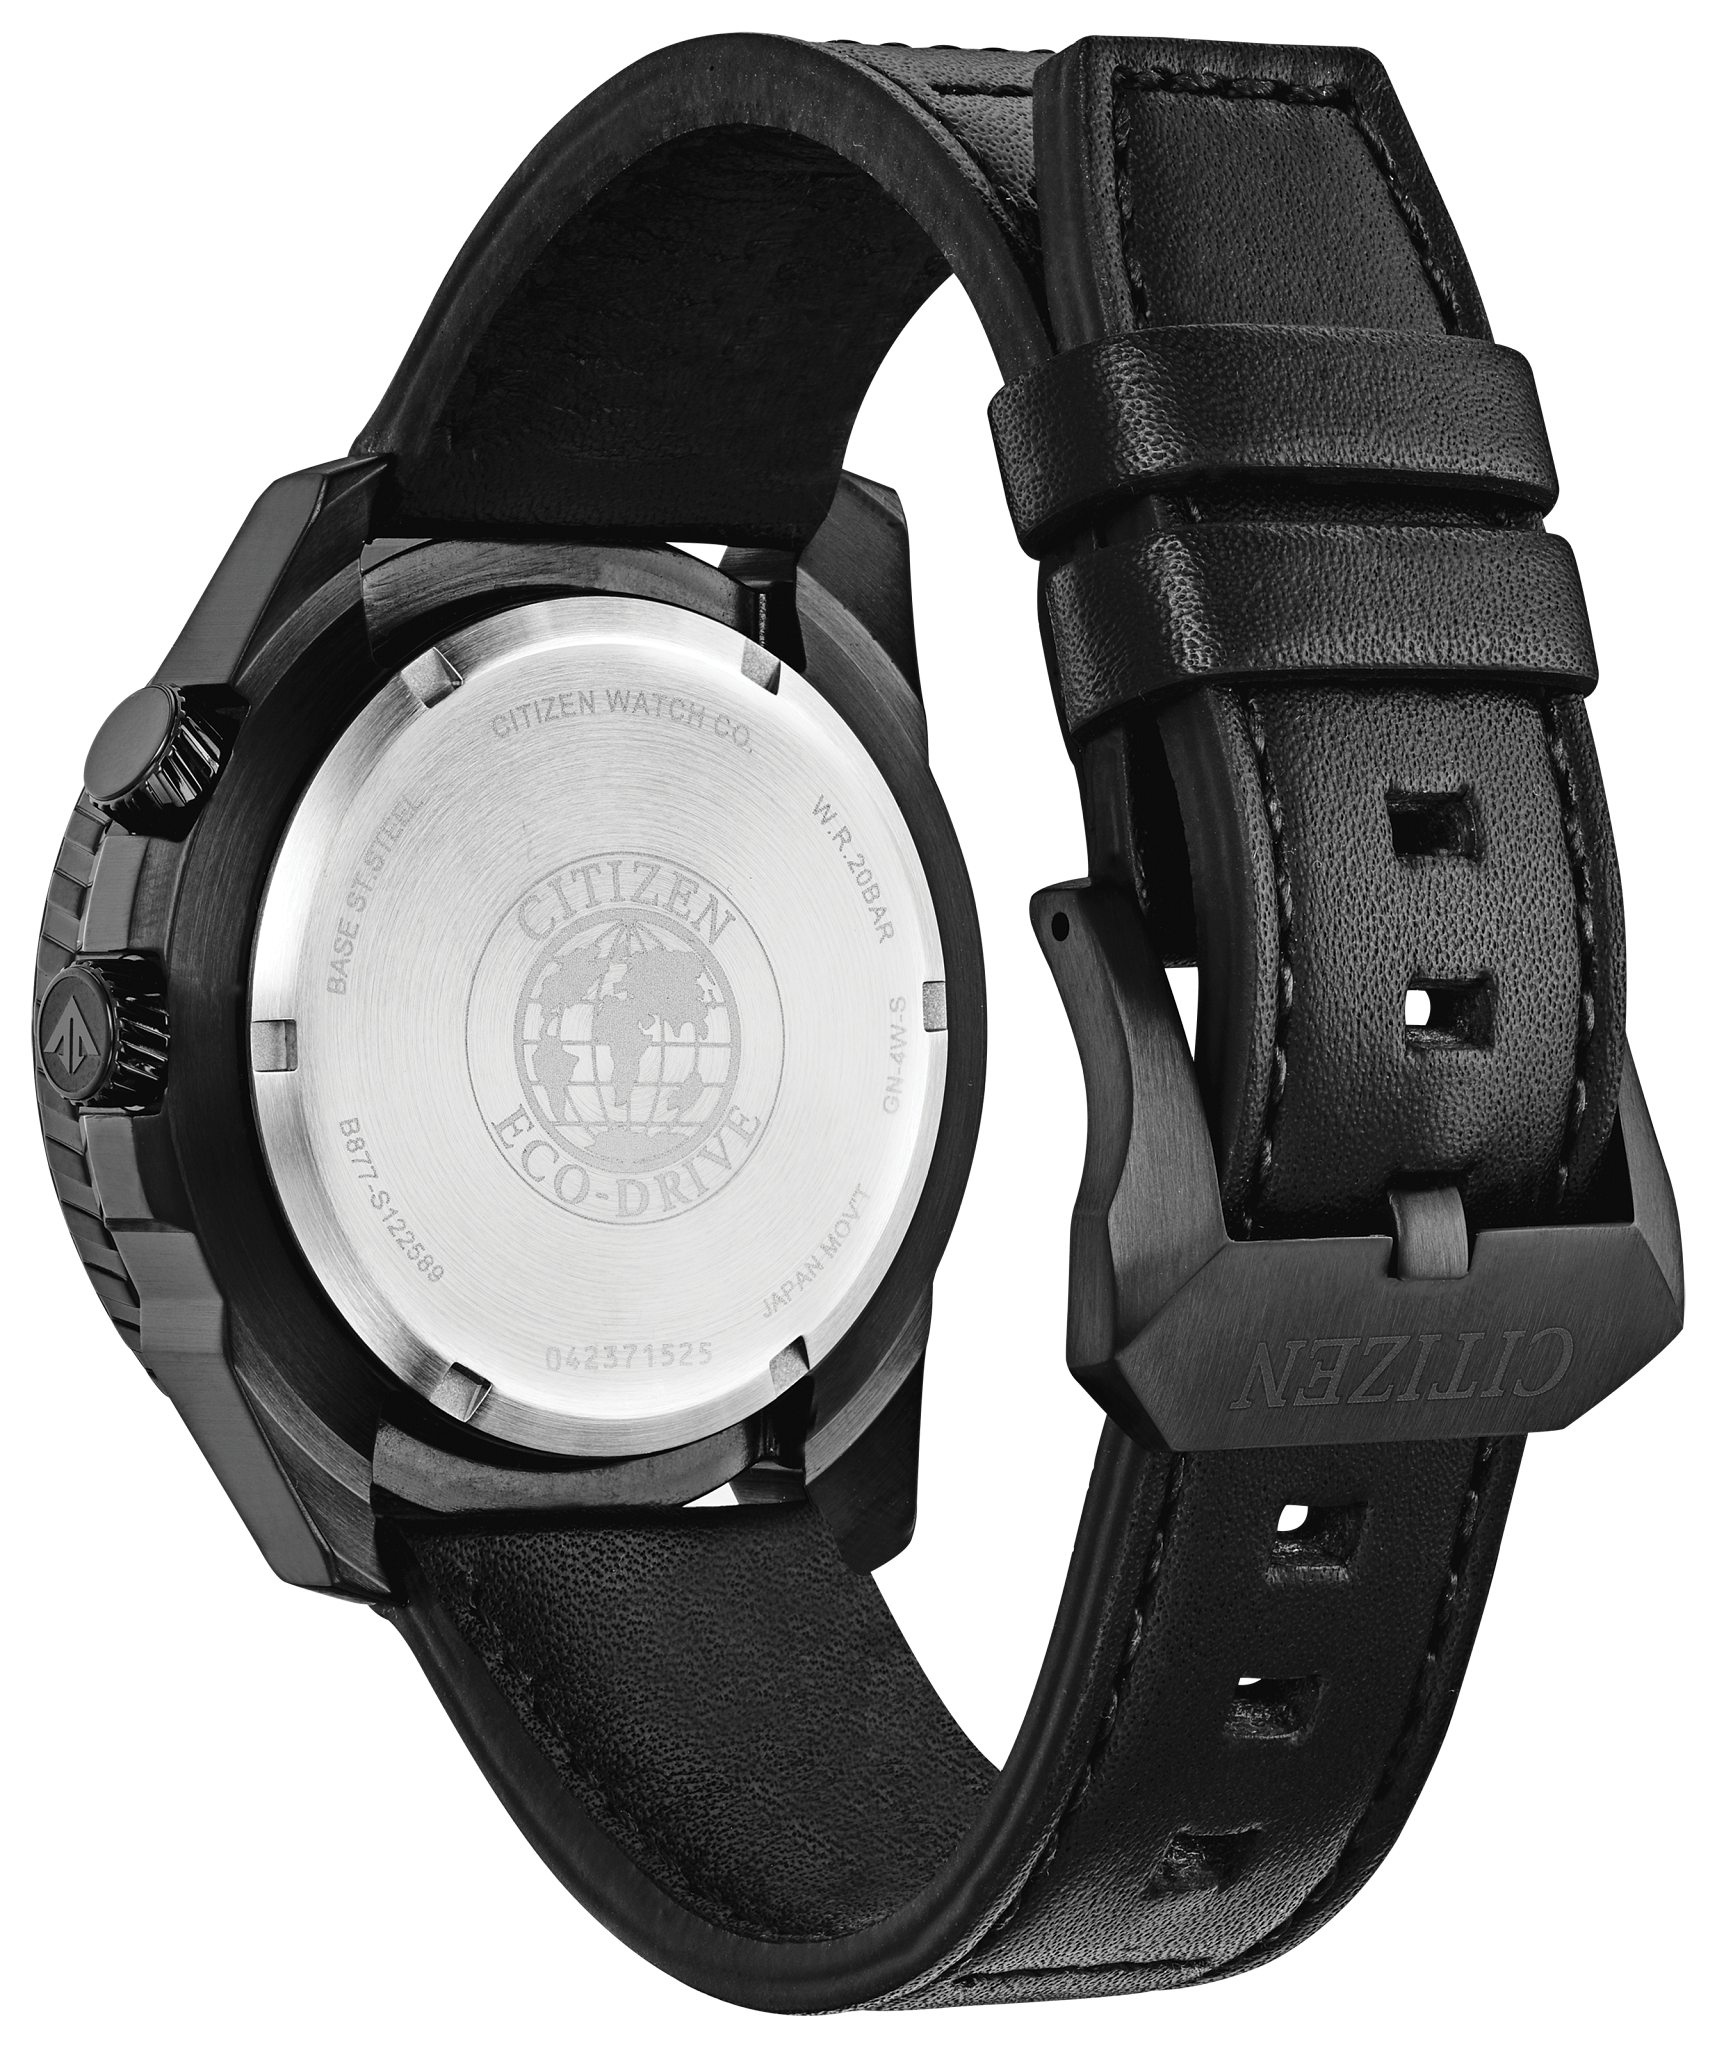 Citizen Nighthawk] The watch for a roadtrip or getaway : r/Watches